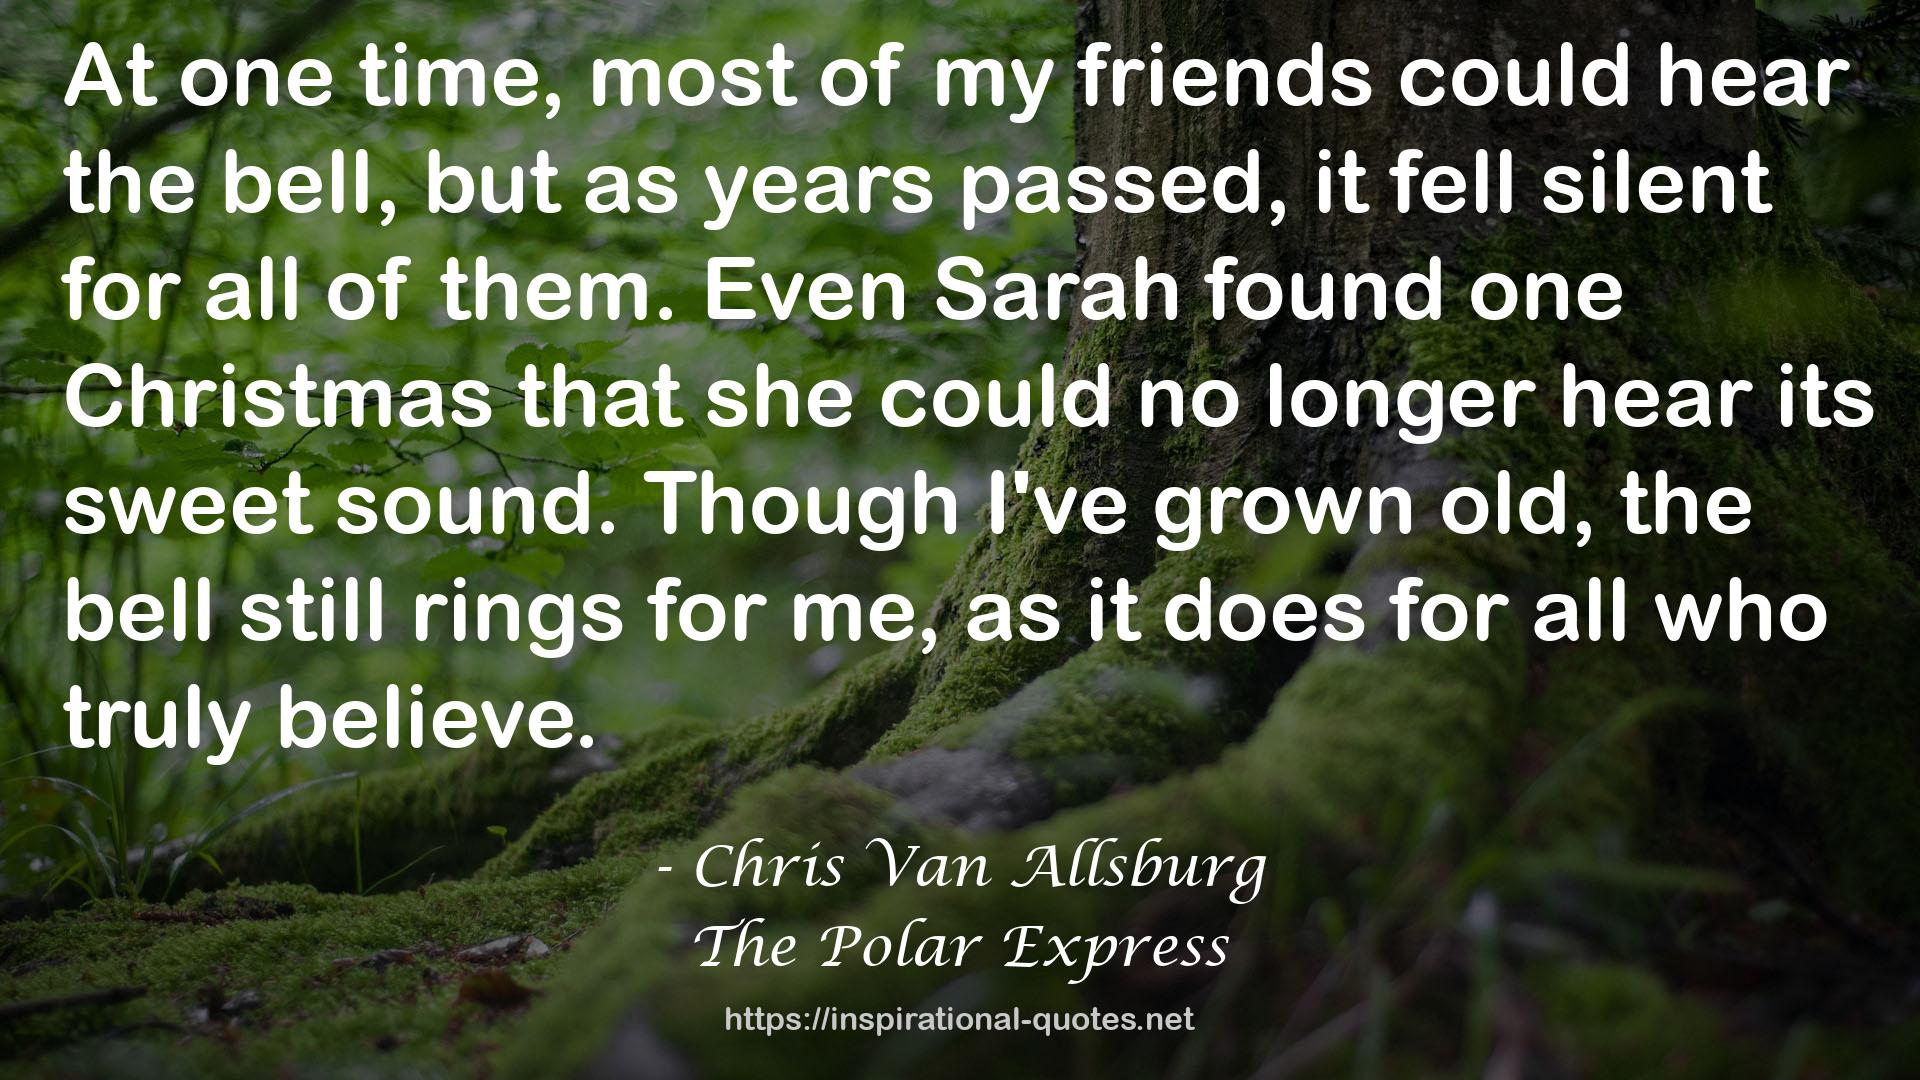 Chris Van Allsburg QUOTES